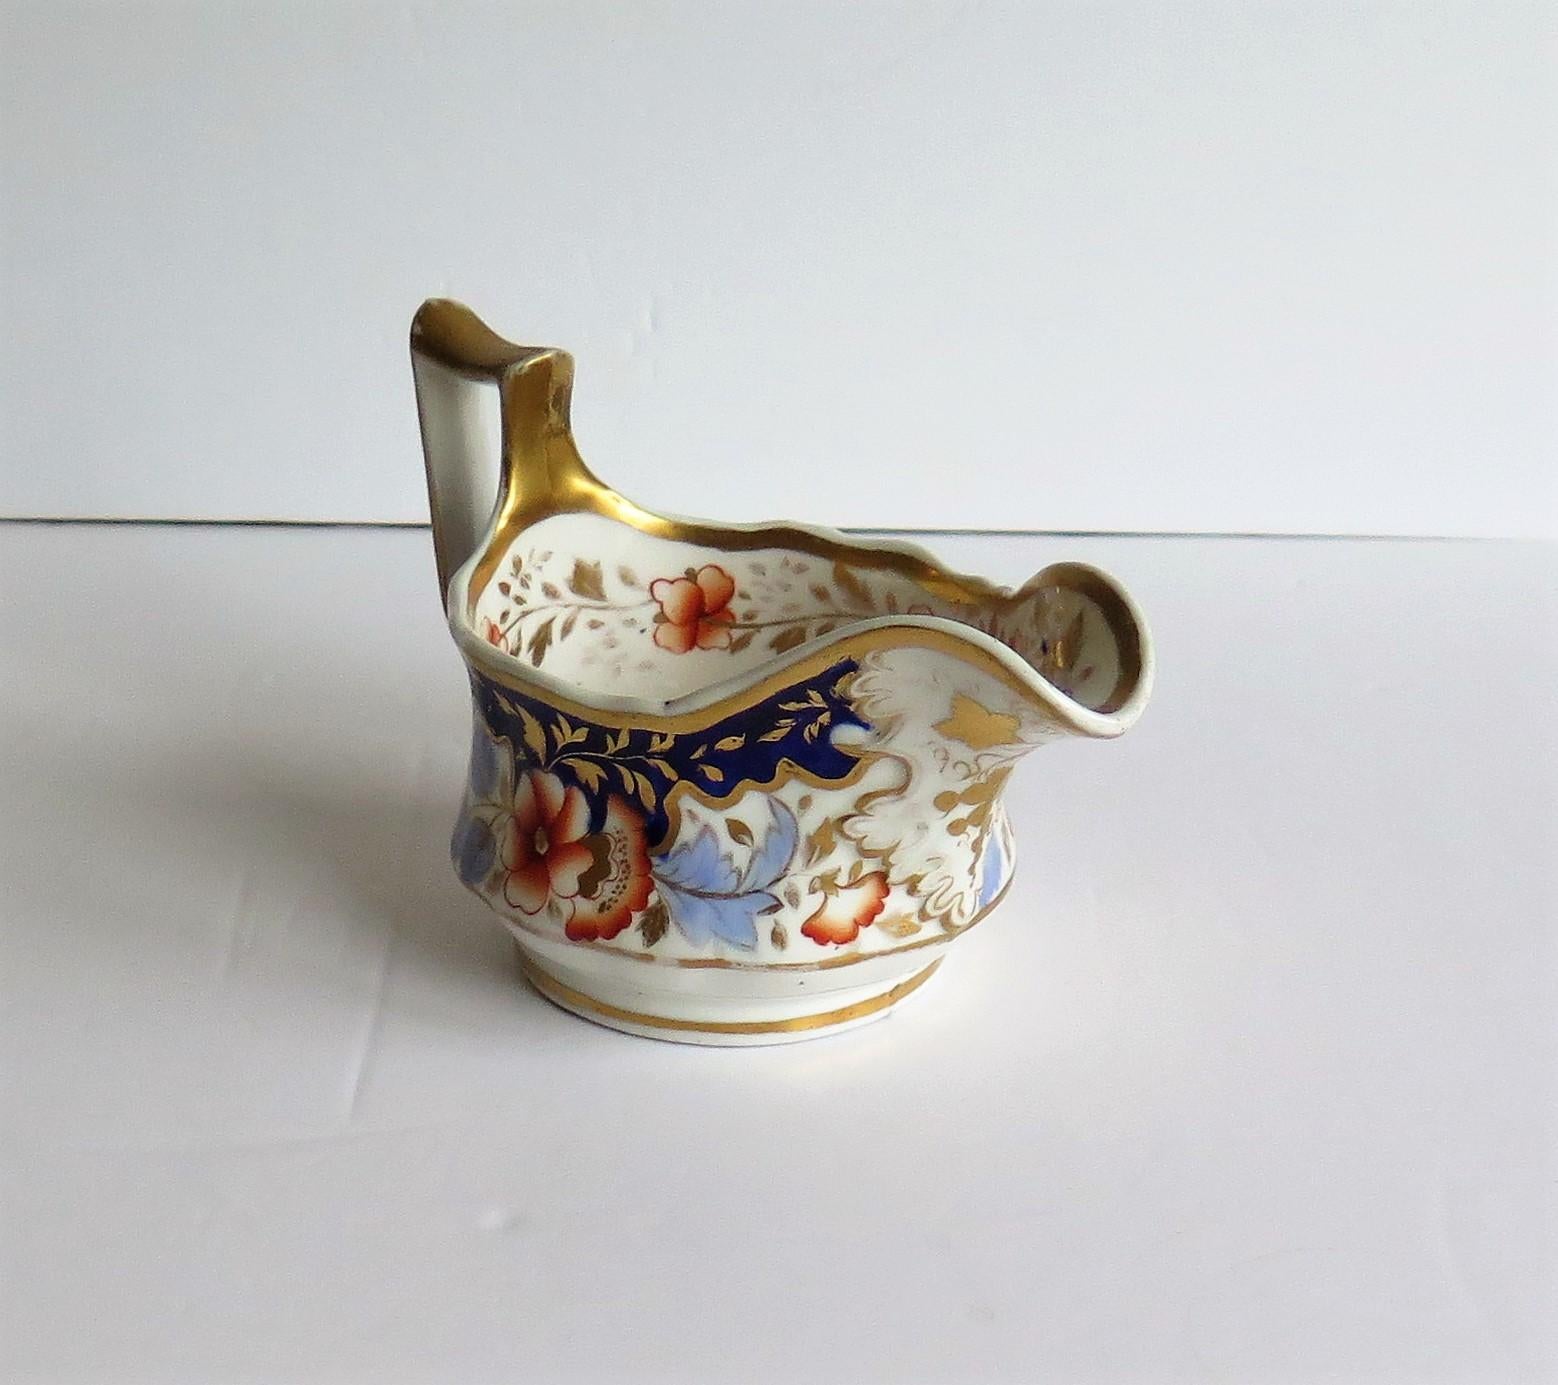 19th Century Ridgway Porcelain Milk Jug or Creamer Pattern 2/1005, Regency Period, circa 1825 For Sale